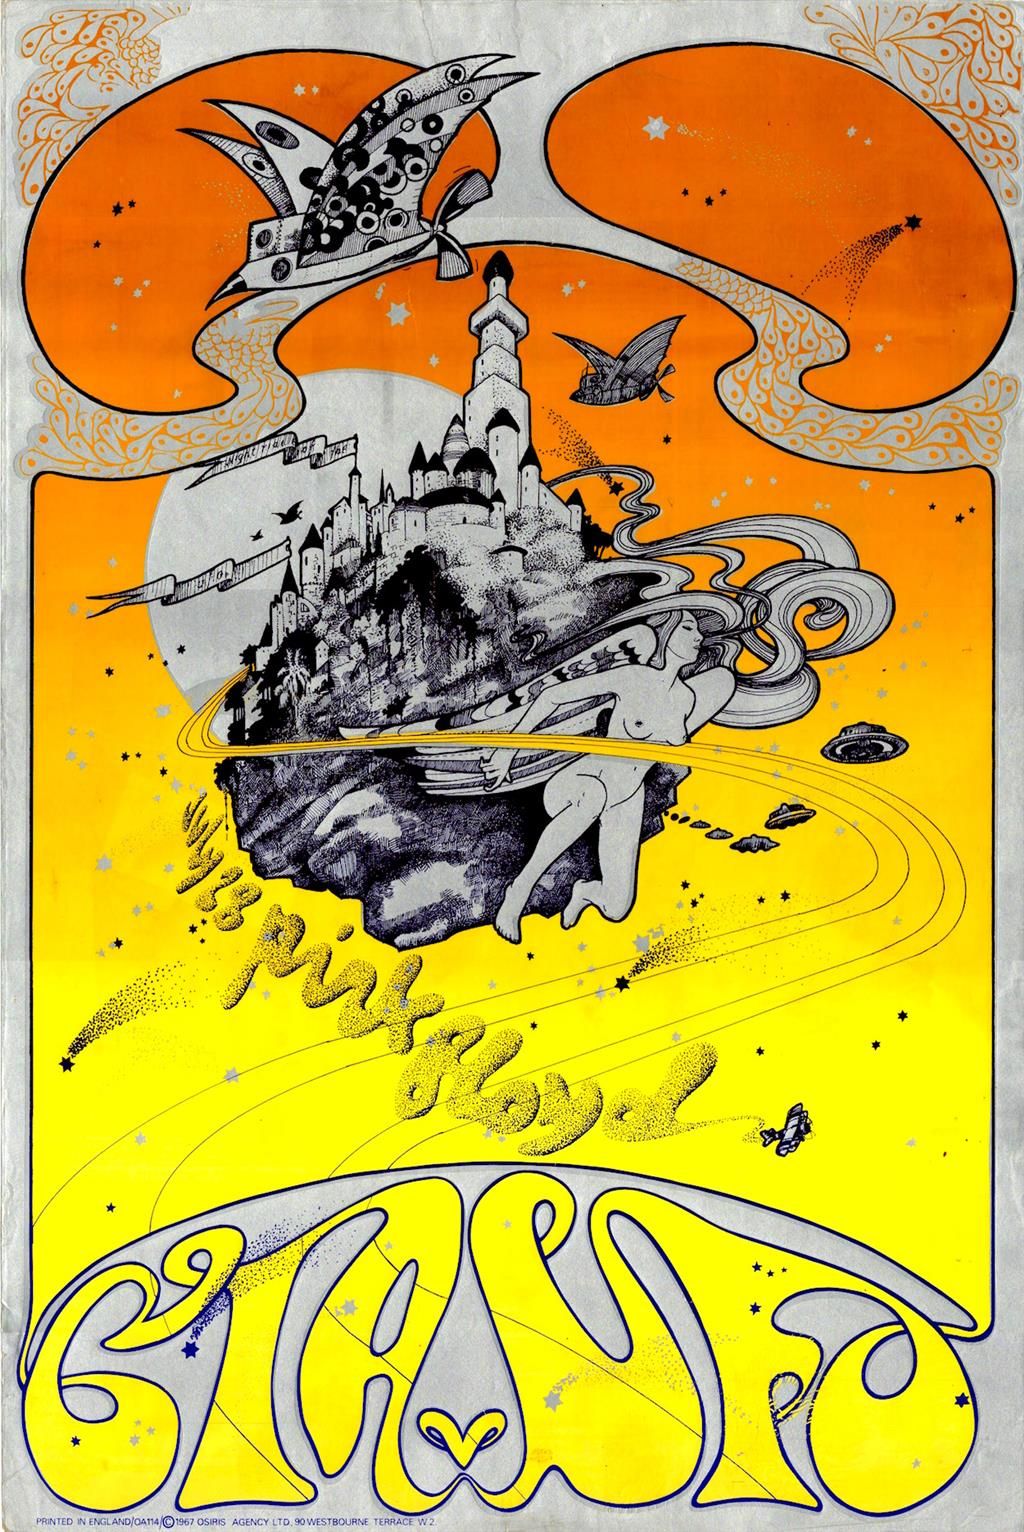 Pink Floyd at UFO Club Jul 28, 1967 Concert Poster